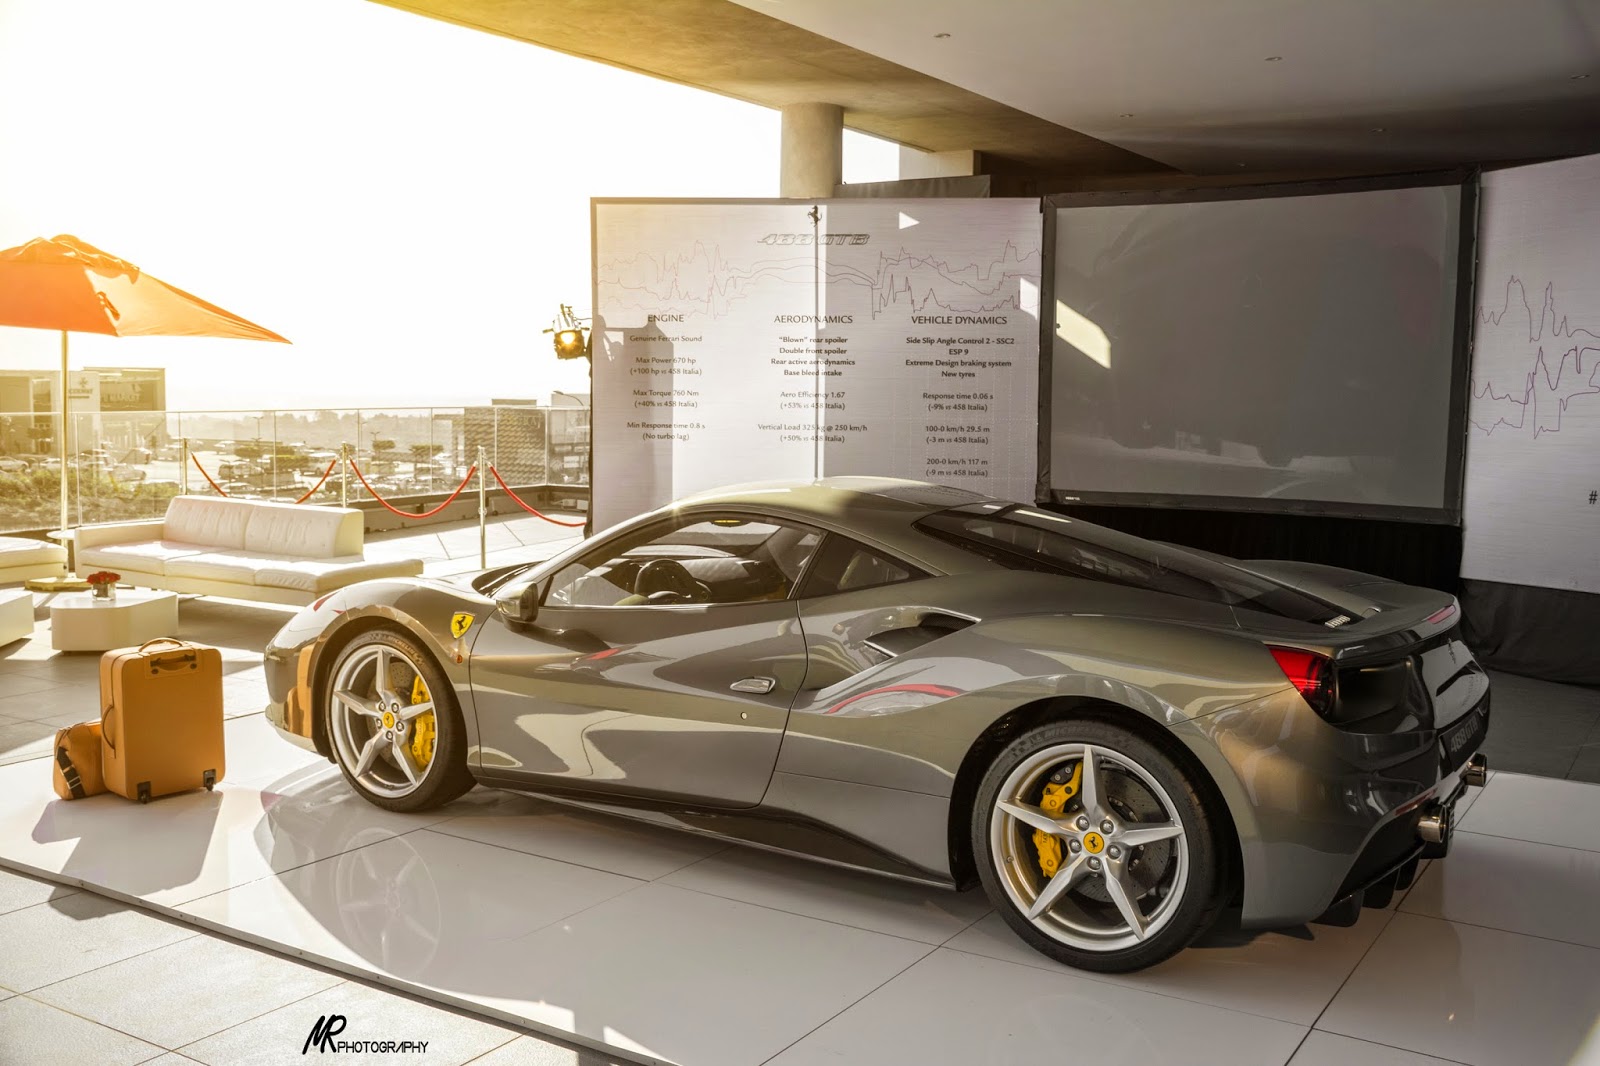 The New Ferrari 488 Gtb Unveiled In Johannesburg South Africa